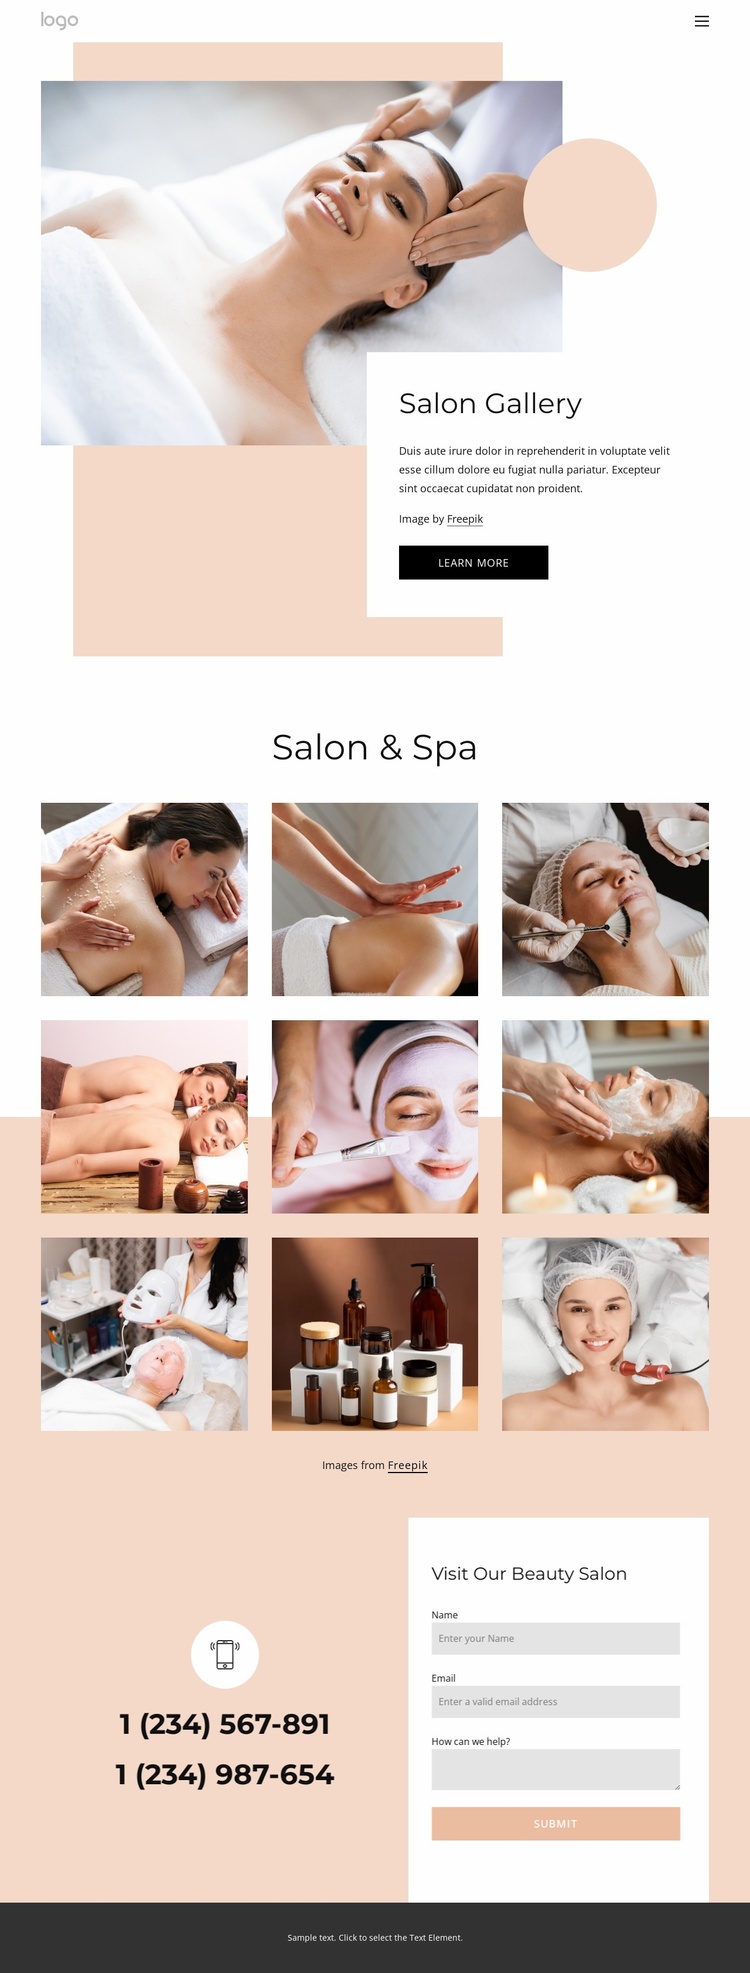 Beauty salon gallery Ecommerce Website Design